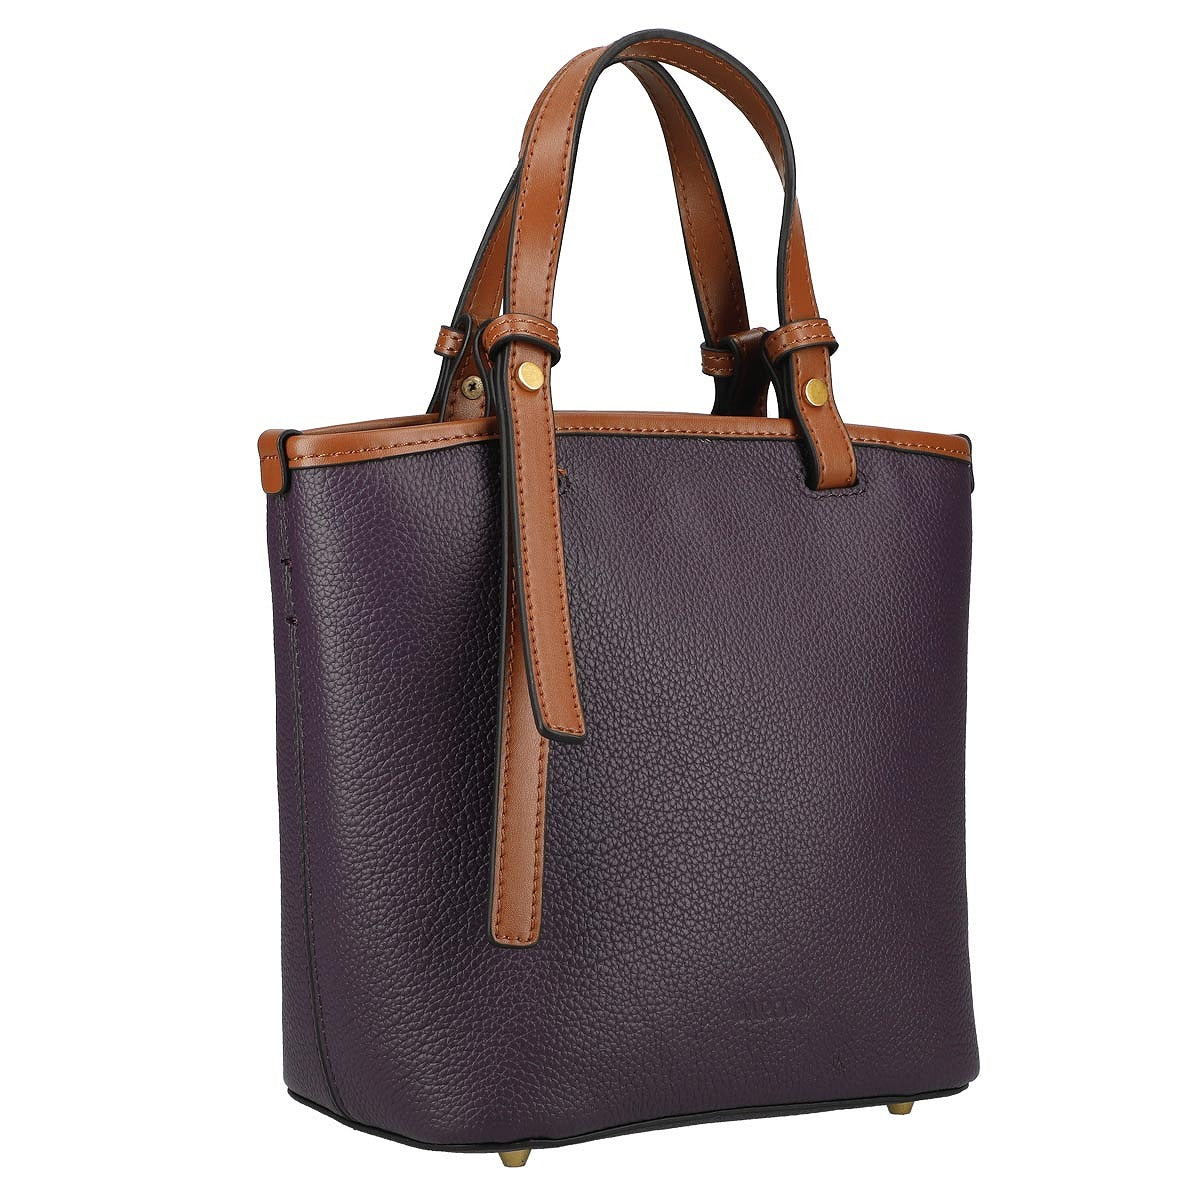 Bucket Tote 2 Color Tone Leather Handbag with Shoulder Strap Attachment